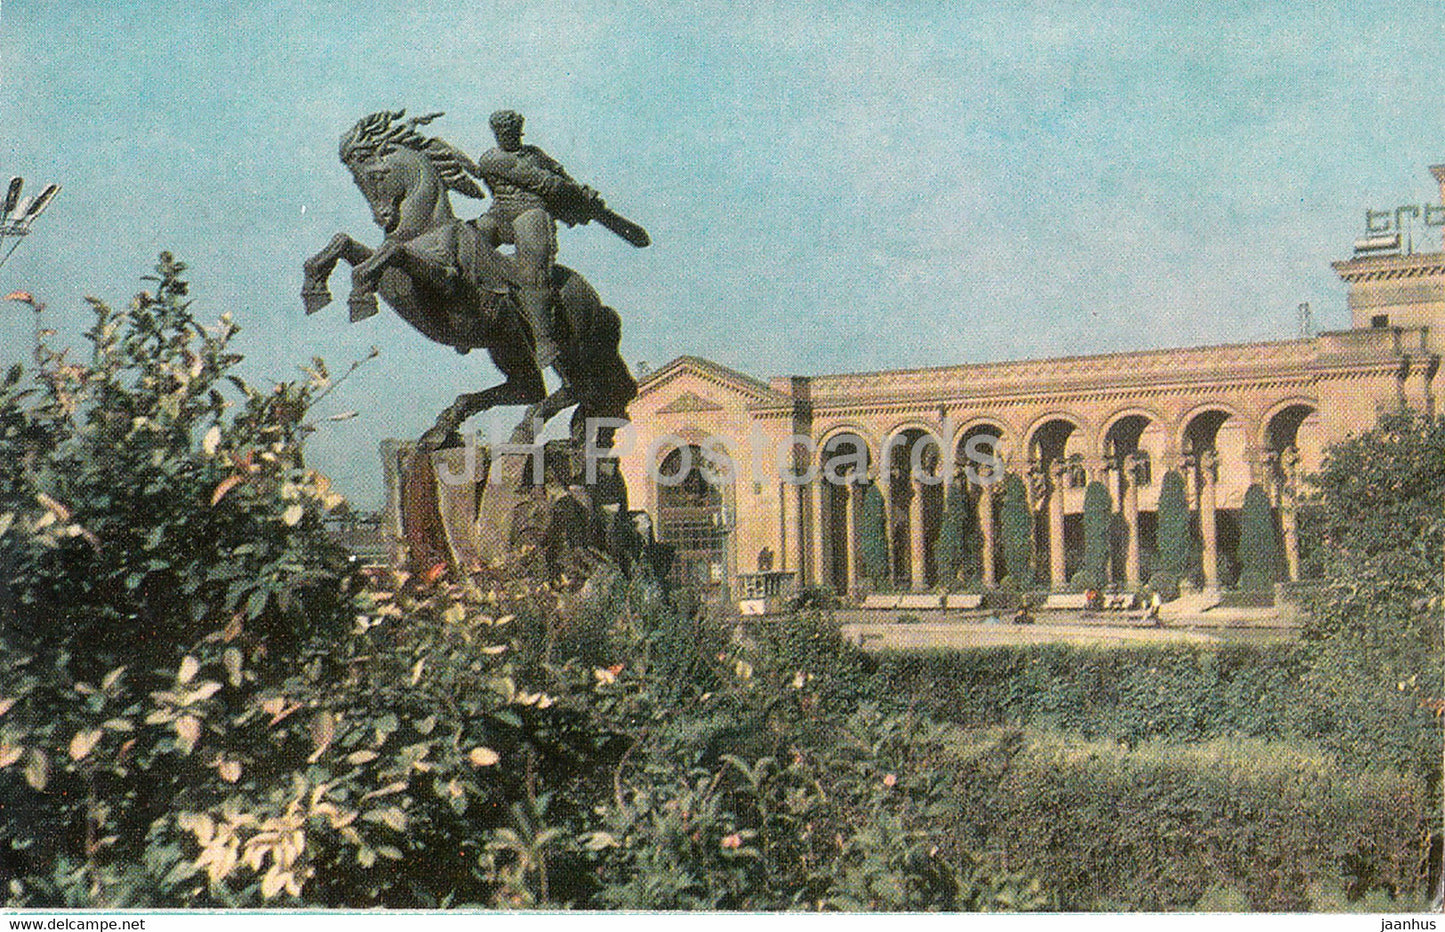 Yerevan - monument to David Sassun in front of the Yerevan terminus - Armenia USSR - unused - JH Postcards